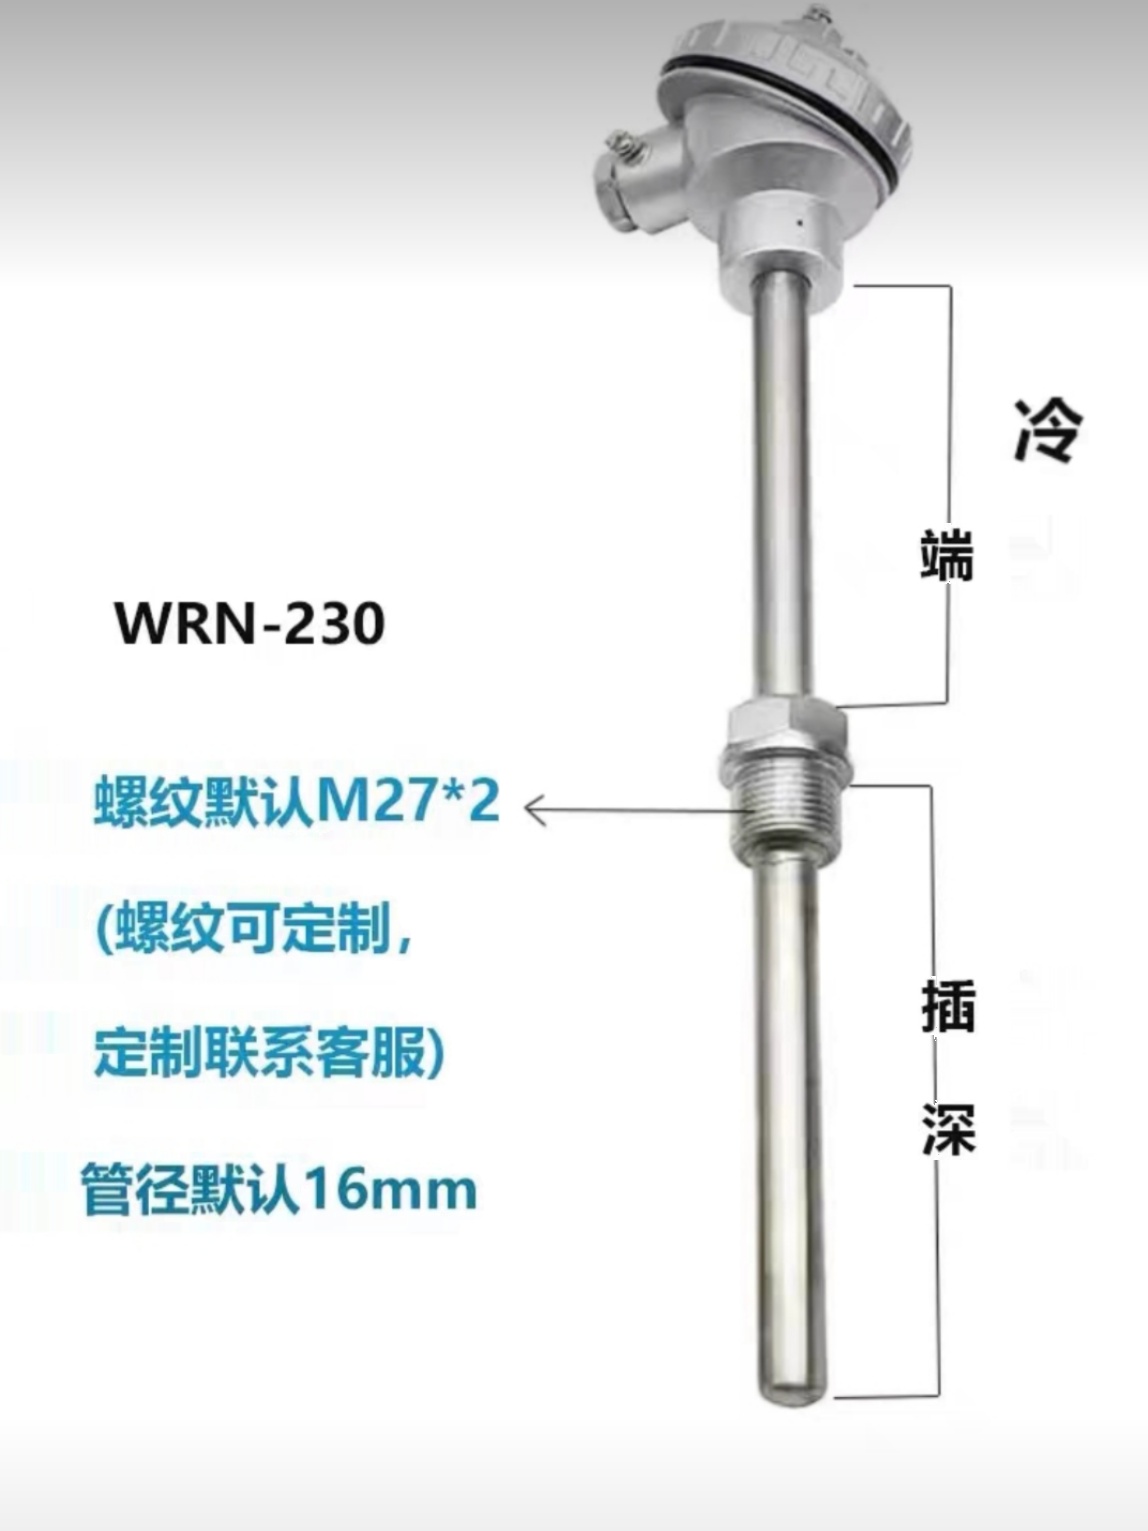 WZP-230水箱测温探头PT100电镀槽热电阻铂电阻温度传感器上海松酷